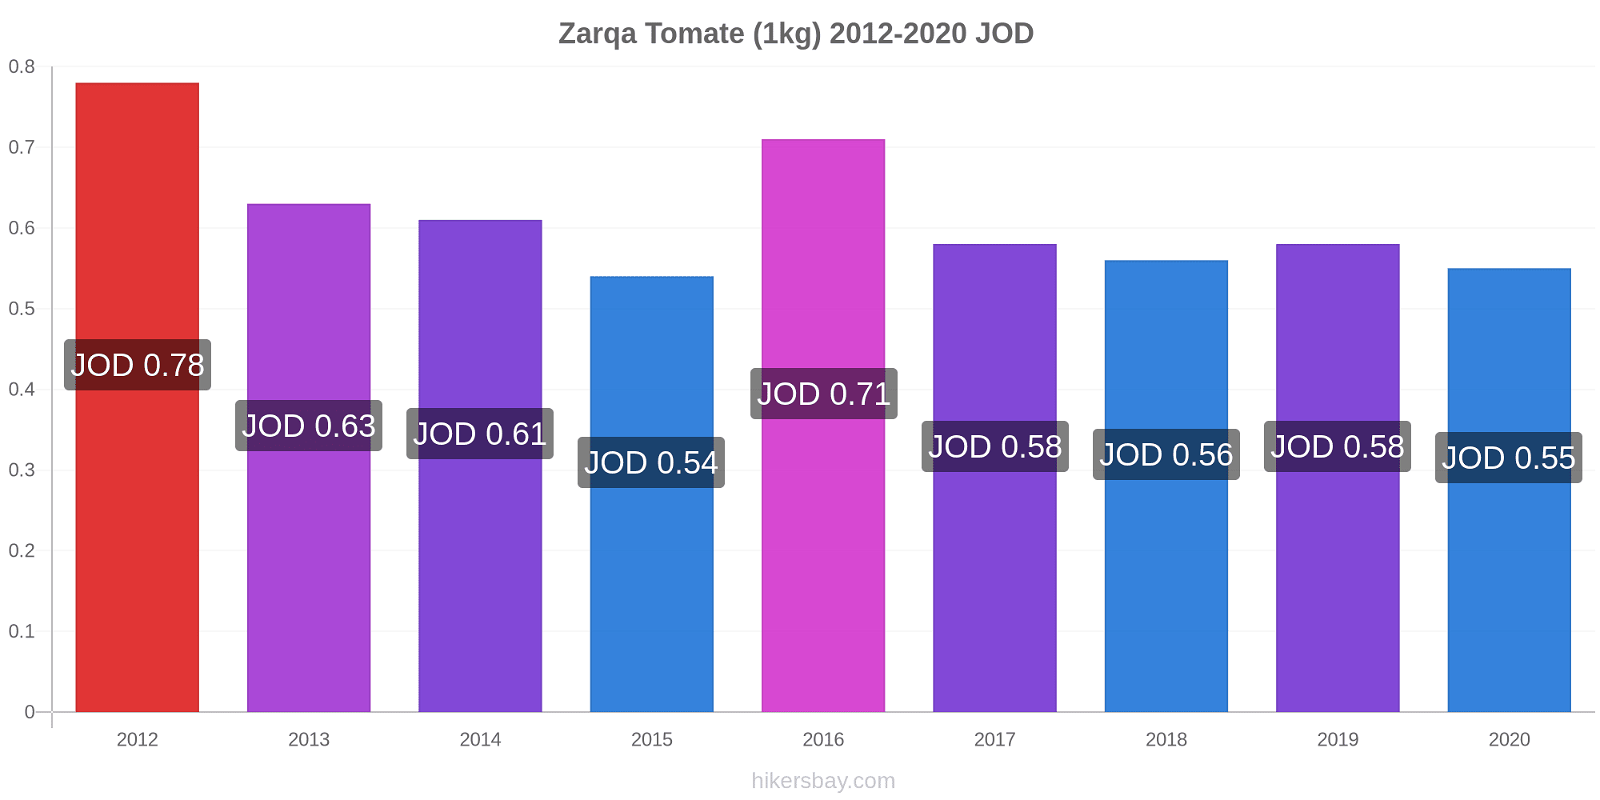 Zarqa cambios de precios Tomate (1kg) hikersbay.com